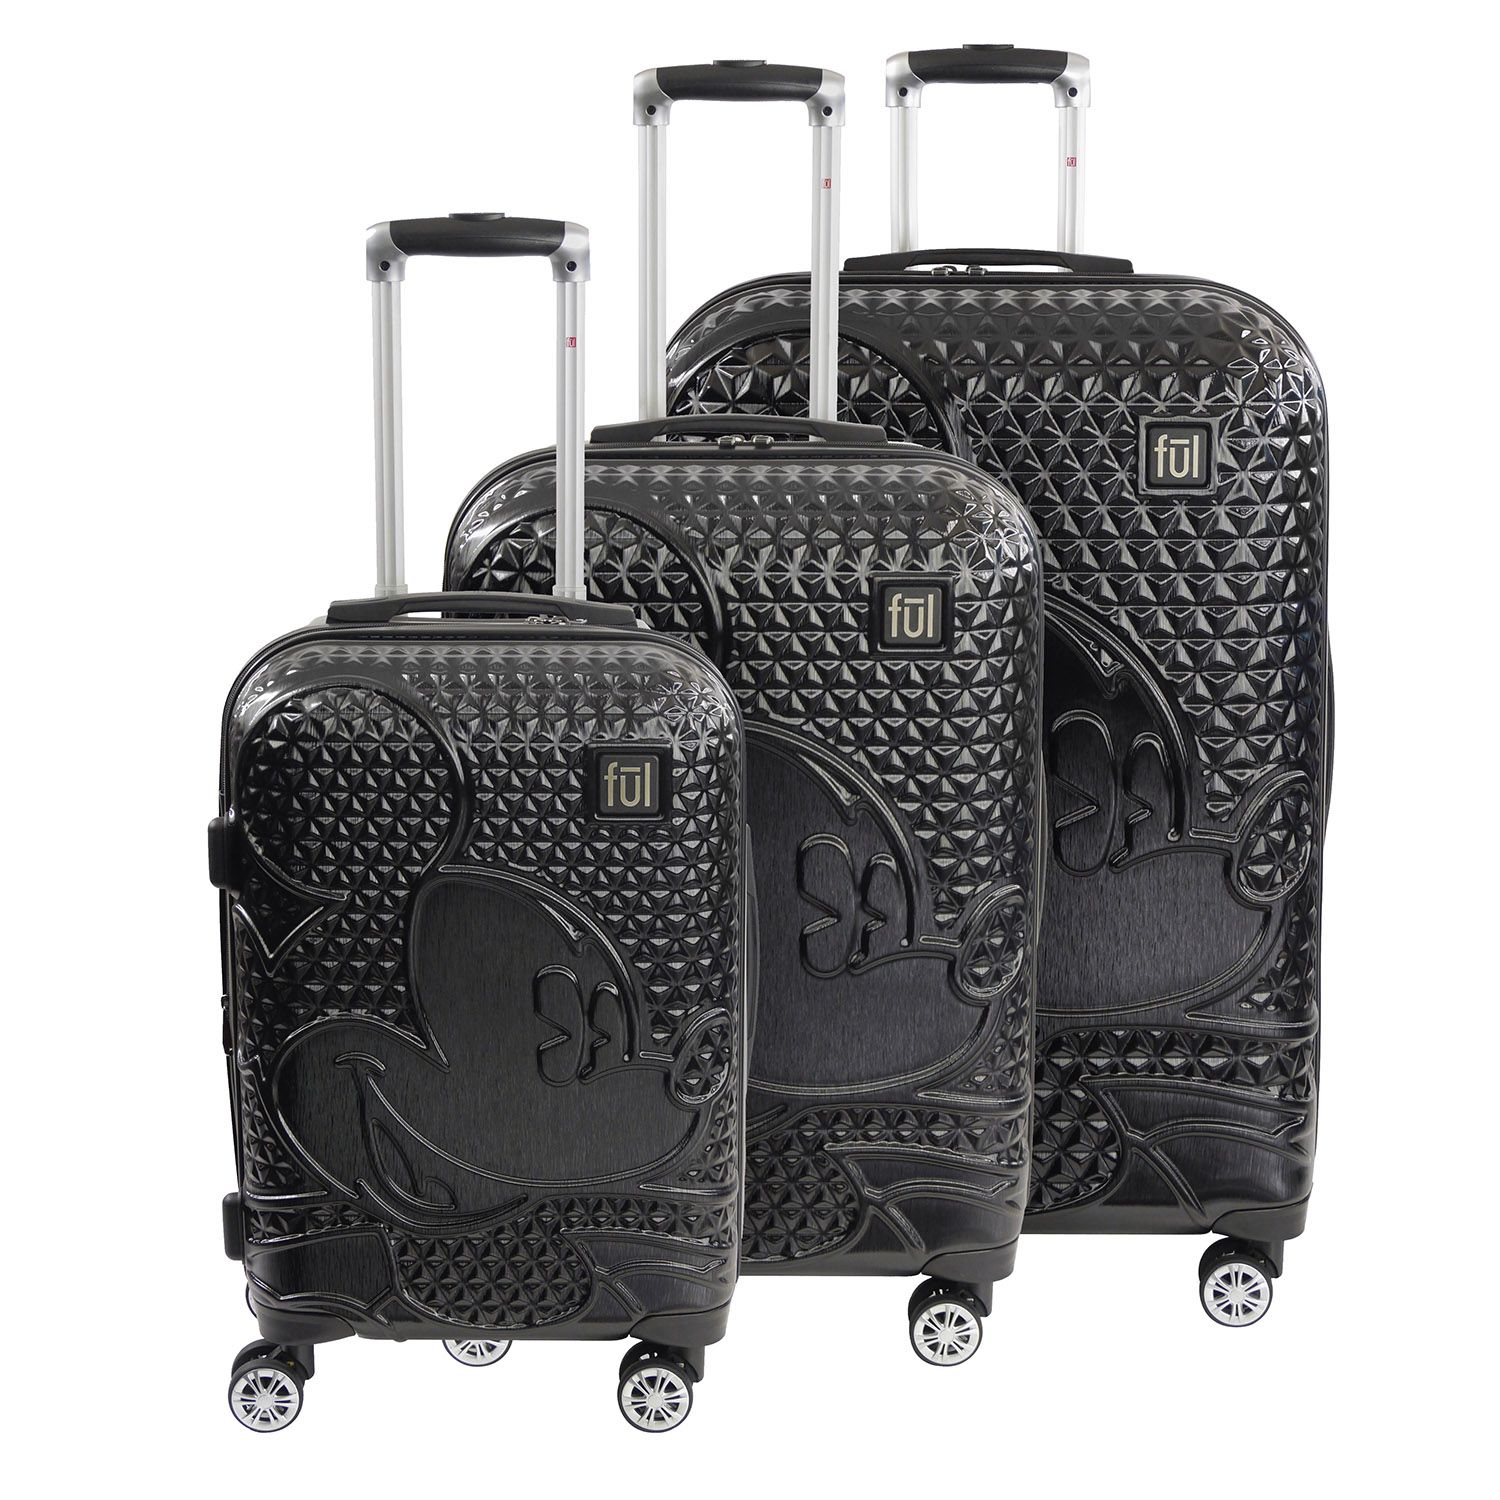 FUL DISNEY Textured Mickey Hard Sided 3 Piece Luggage Set